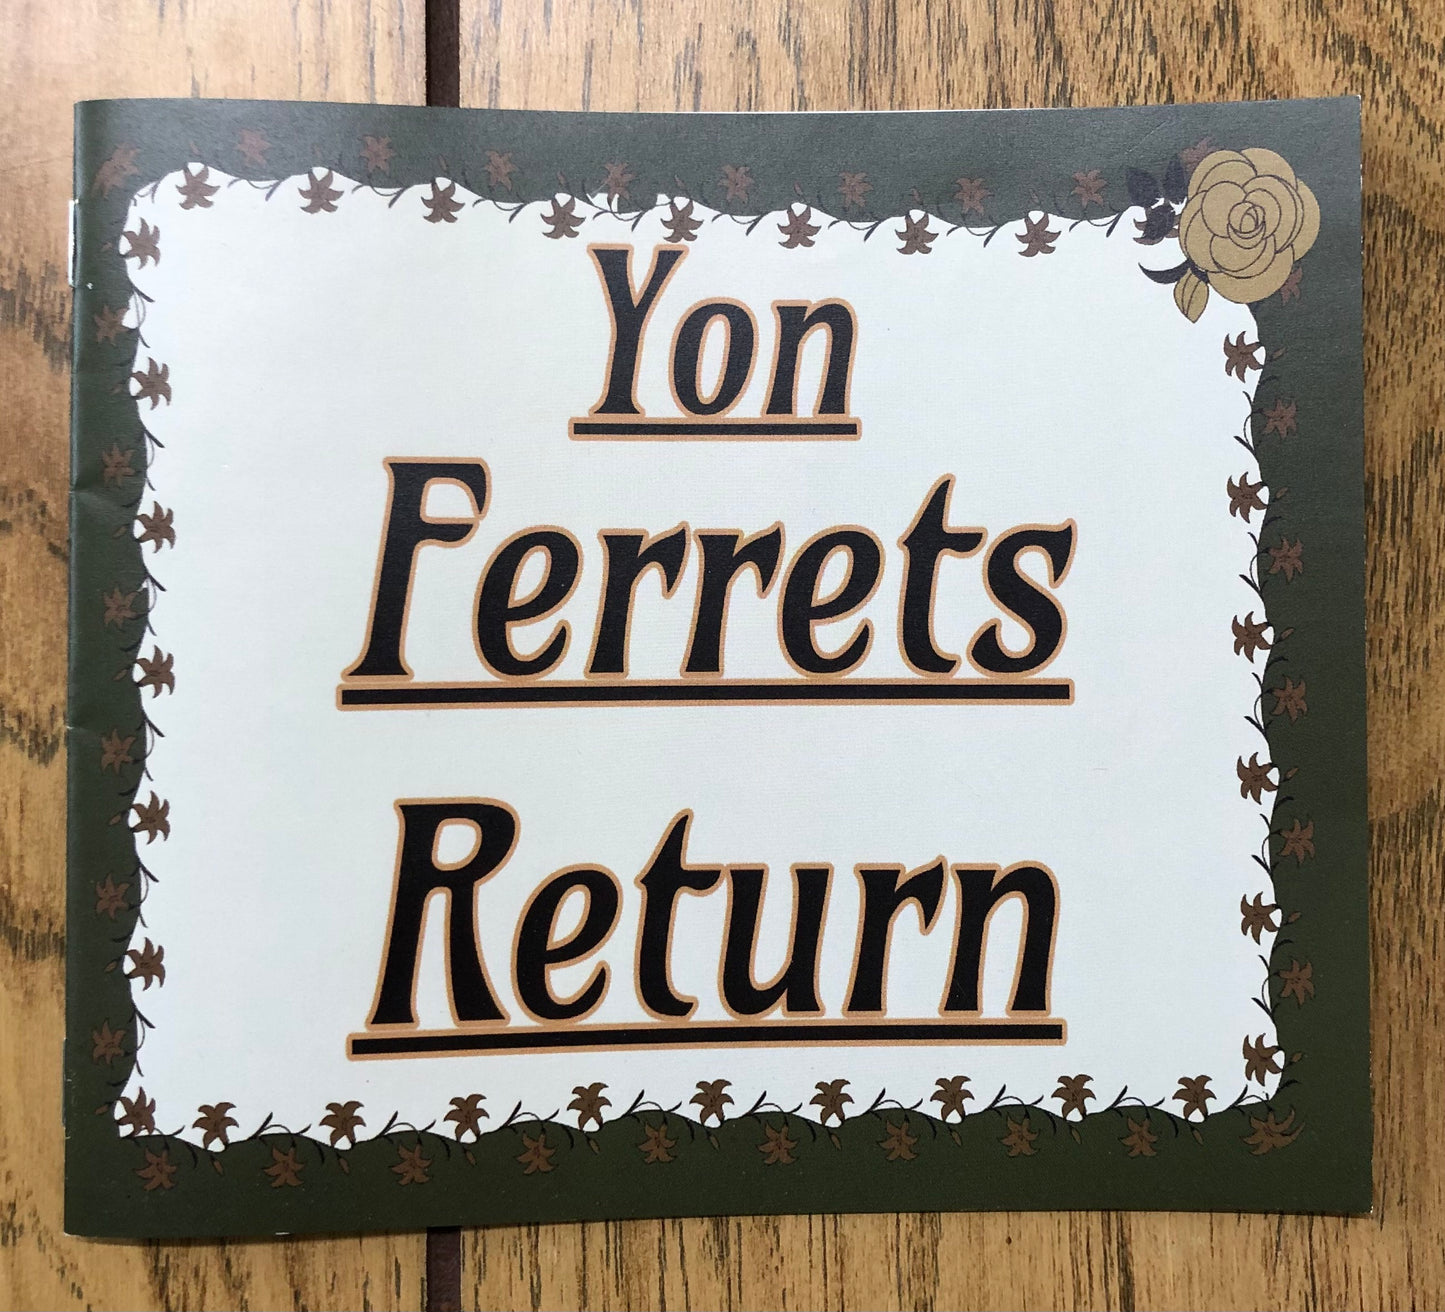 Yon Ferrets Return